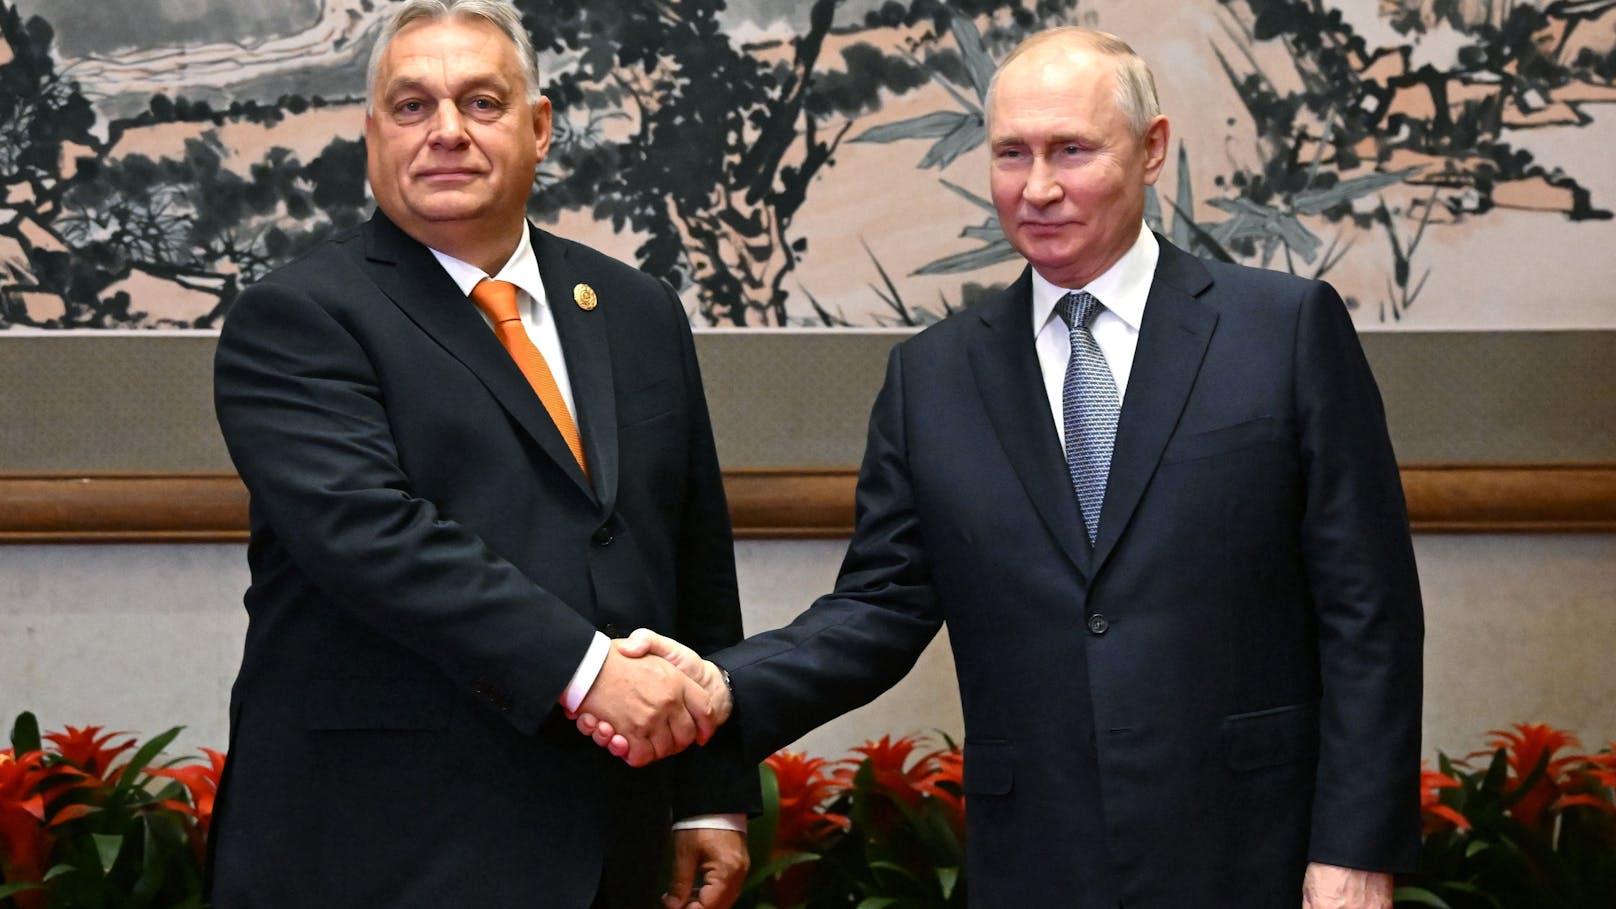 "Beeindruckt uns": Russen feiern Kickl-Freund Orban